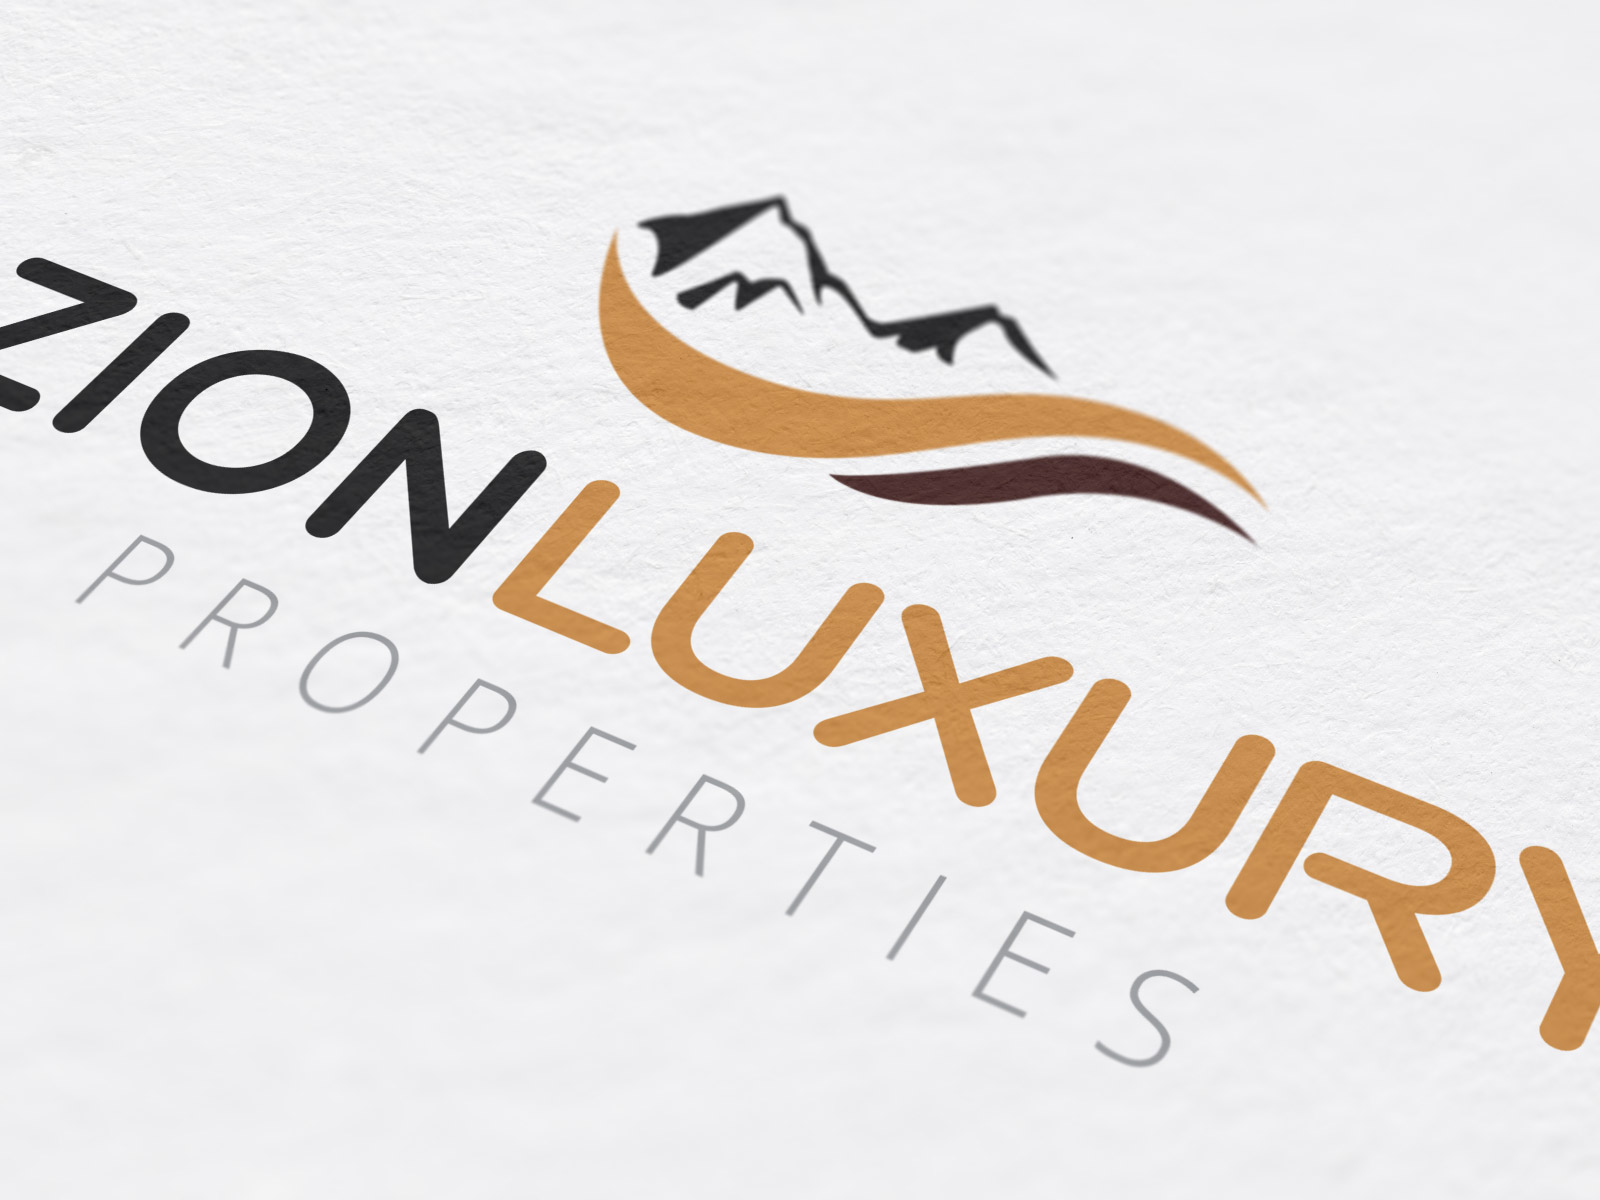 Zion Luxury Properties Logo